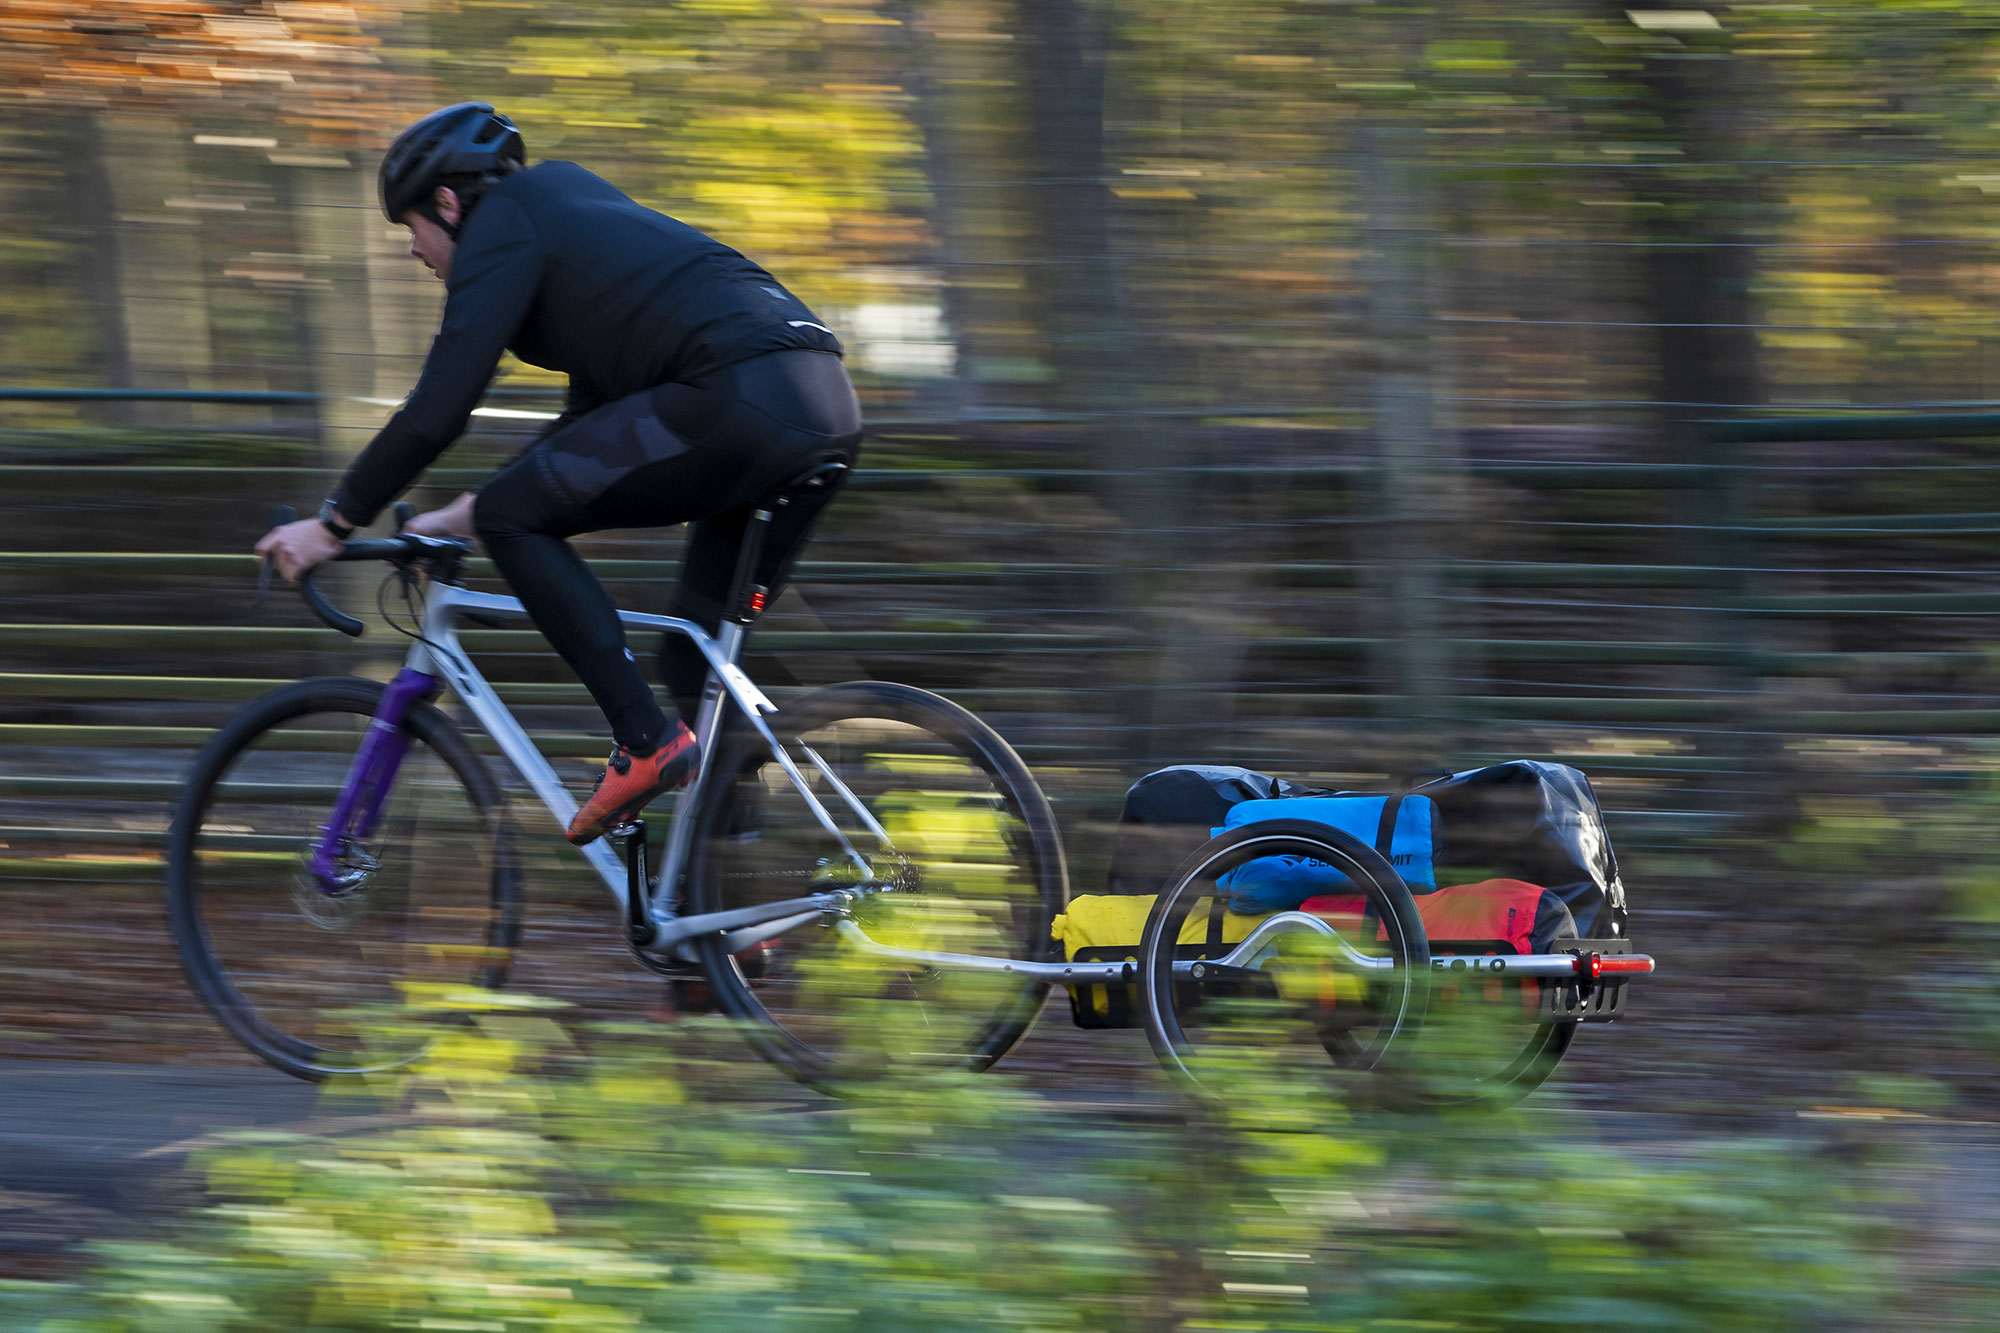 Veolo Bike Trailer, a lightweight modular bicycle cargo trailer, riding